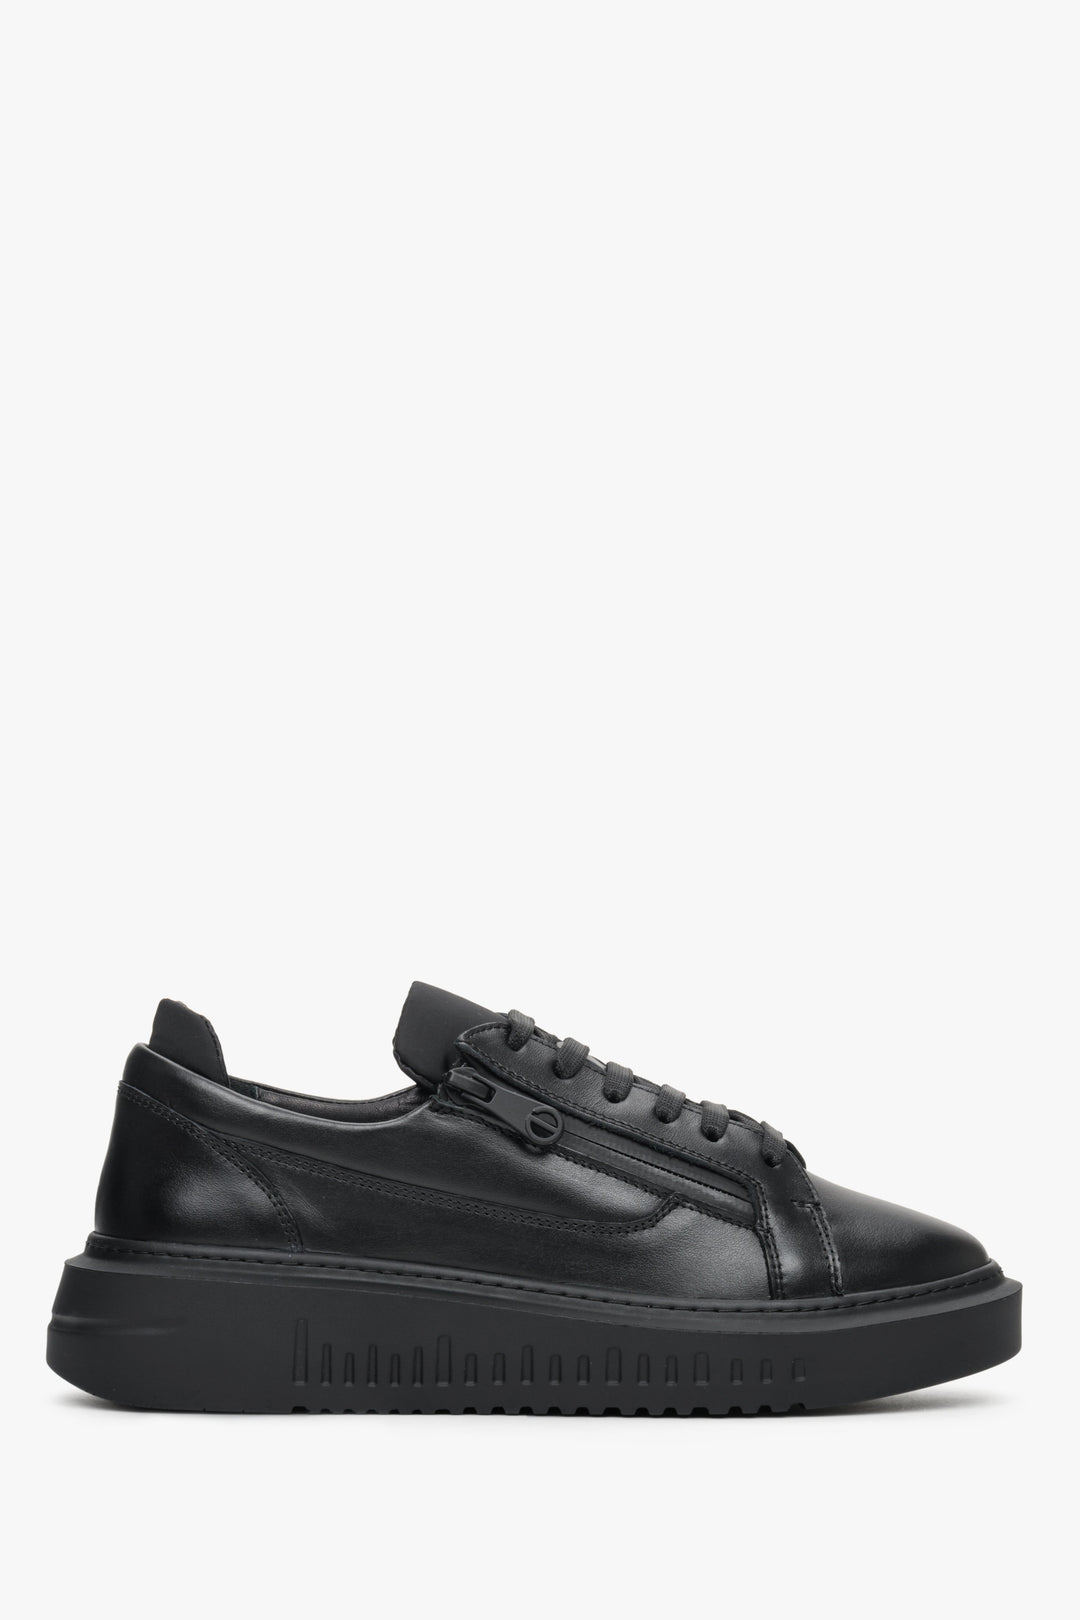 Women's Leather Zipper Sneakers in Black Colour Estro ER00112645.